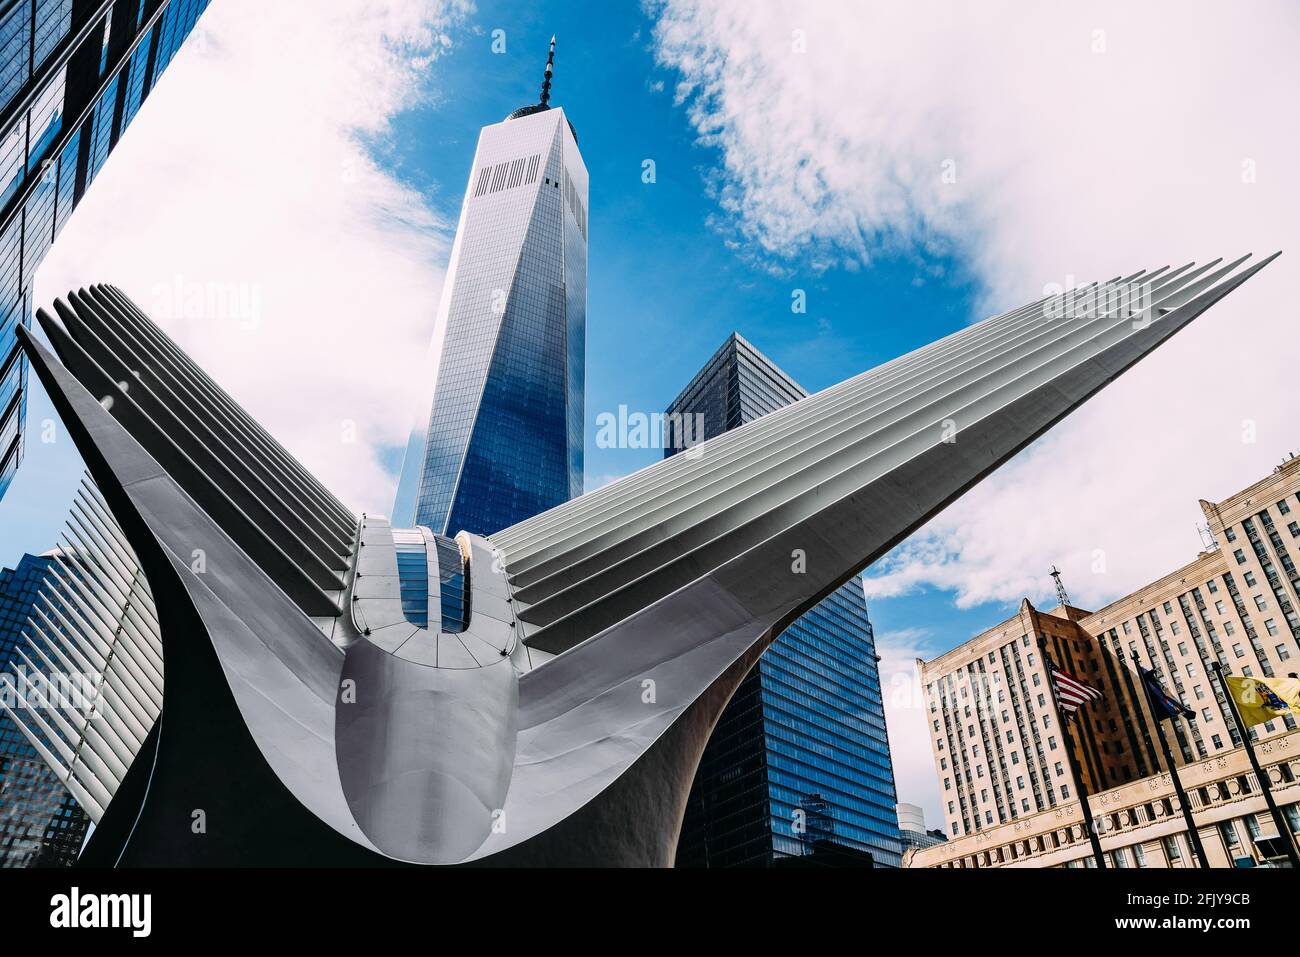 New York City, USA - June 20, 2018: Outdoor view of World Trade Center Transportation Hub or Oculus designed by Santiago Calatrava architect in Financ Stock Photo